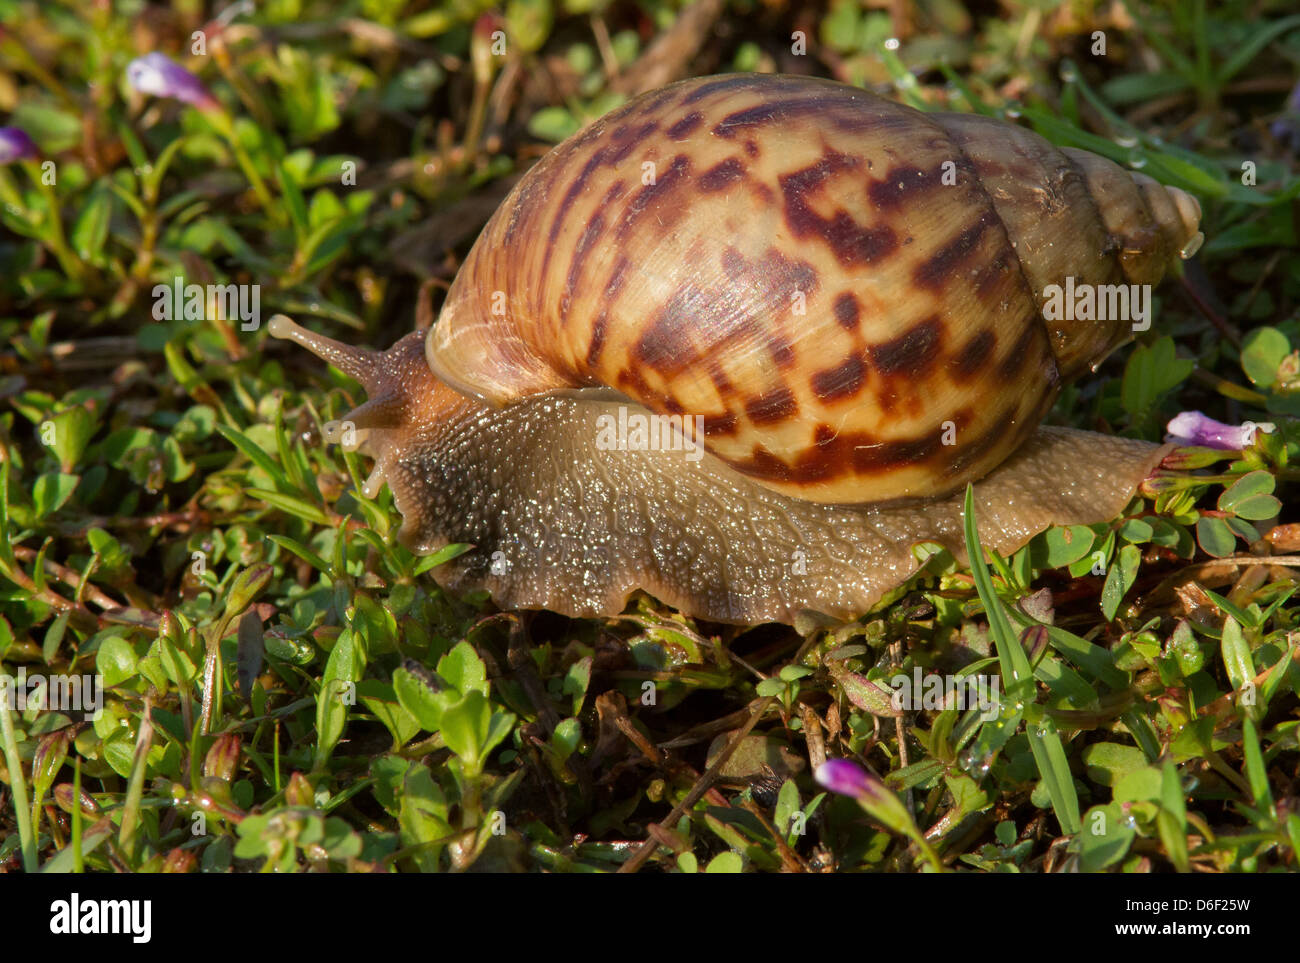 Giant land snail some ten centimetres long in grass Borneo Stock Photo